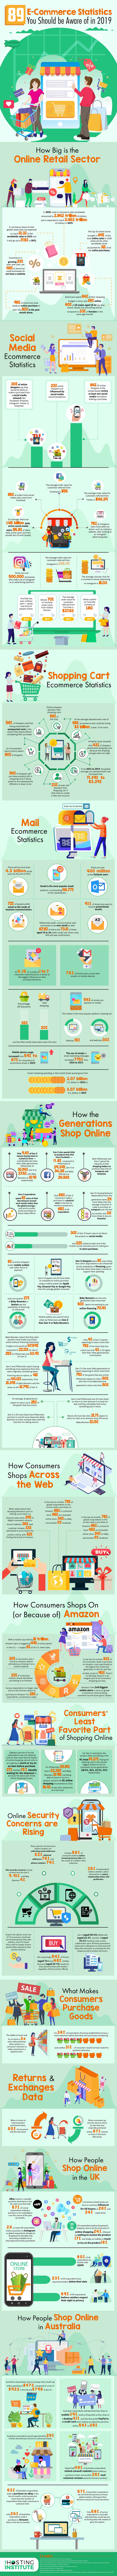 89 e-commerce statistics infographic